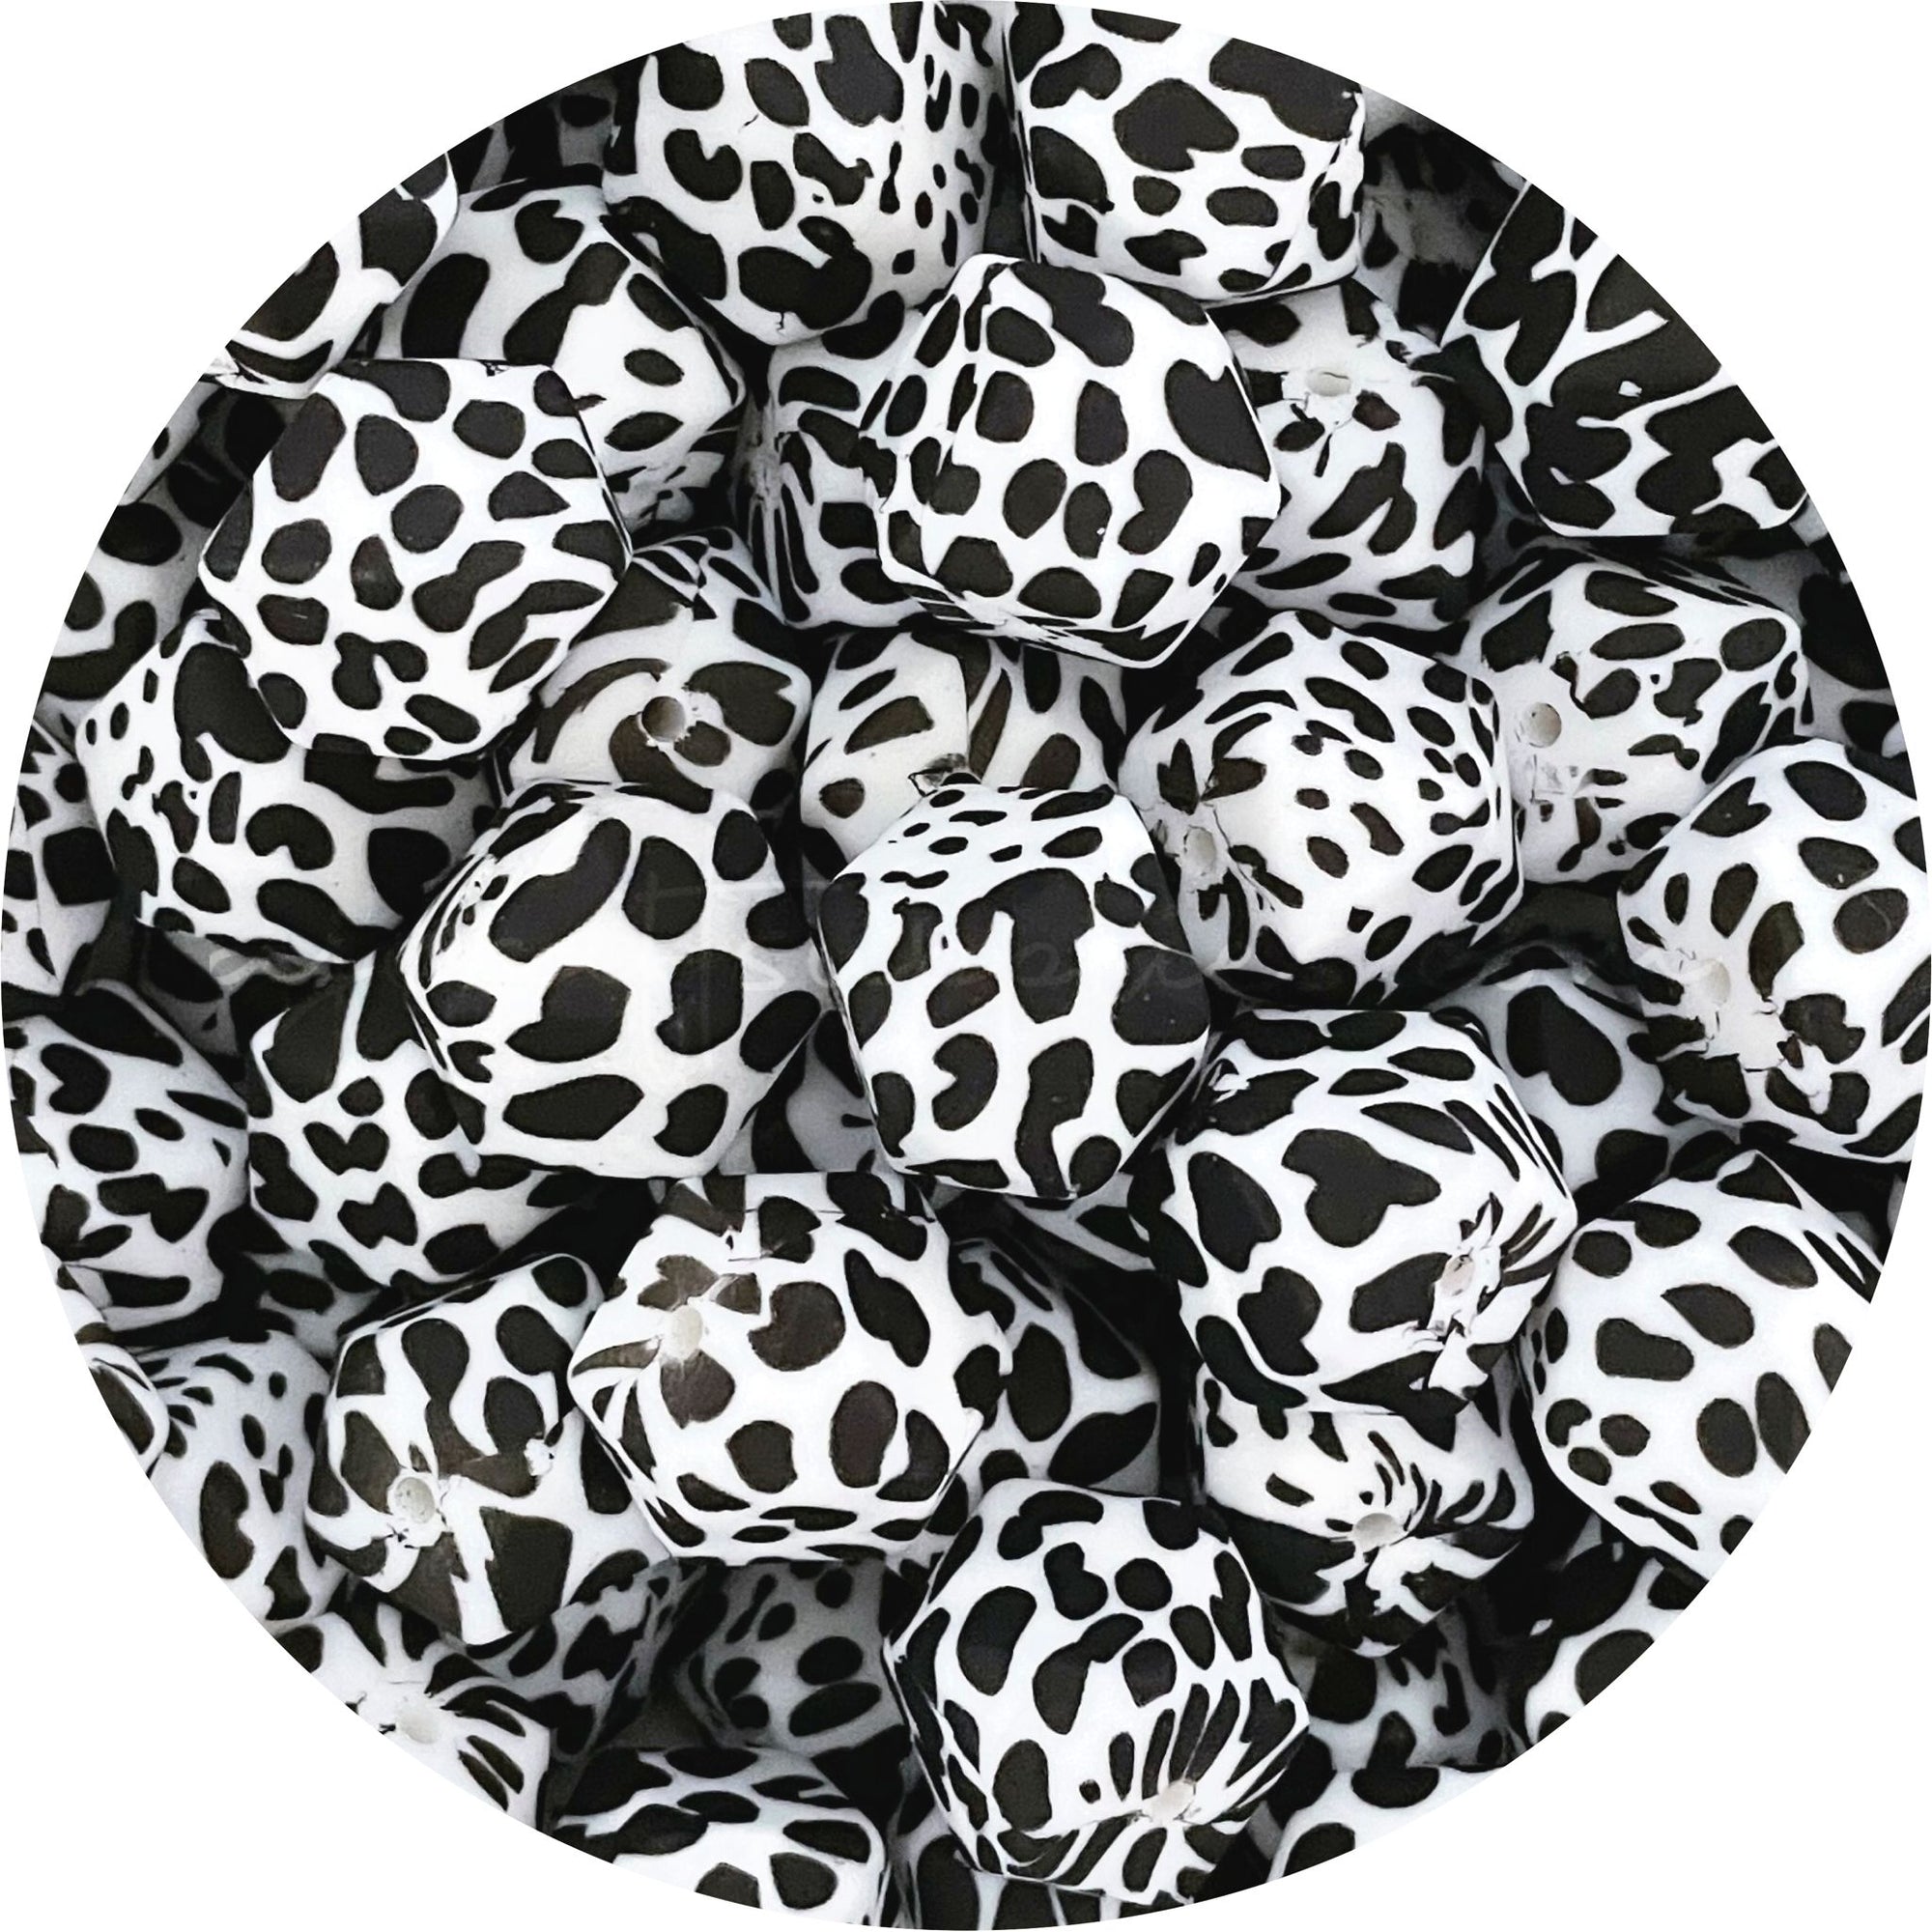 Cow Print - 17mm hexagon - 10 Beads